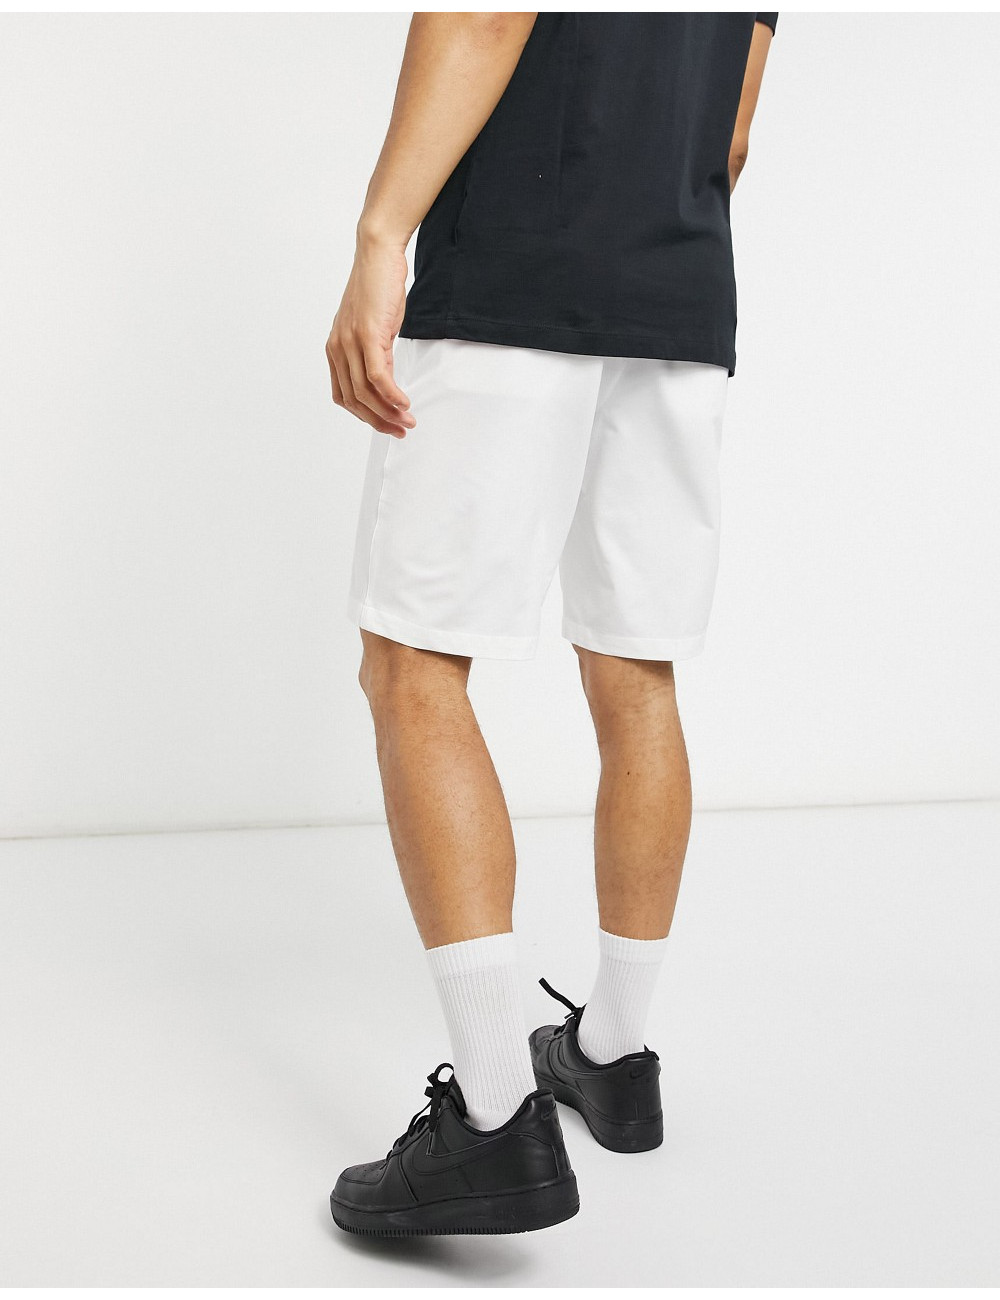 Nike Golf hybrid shorts in...